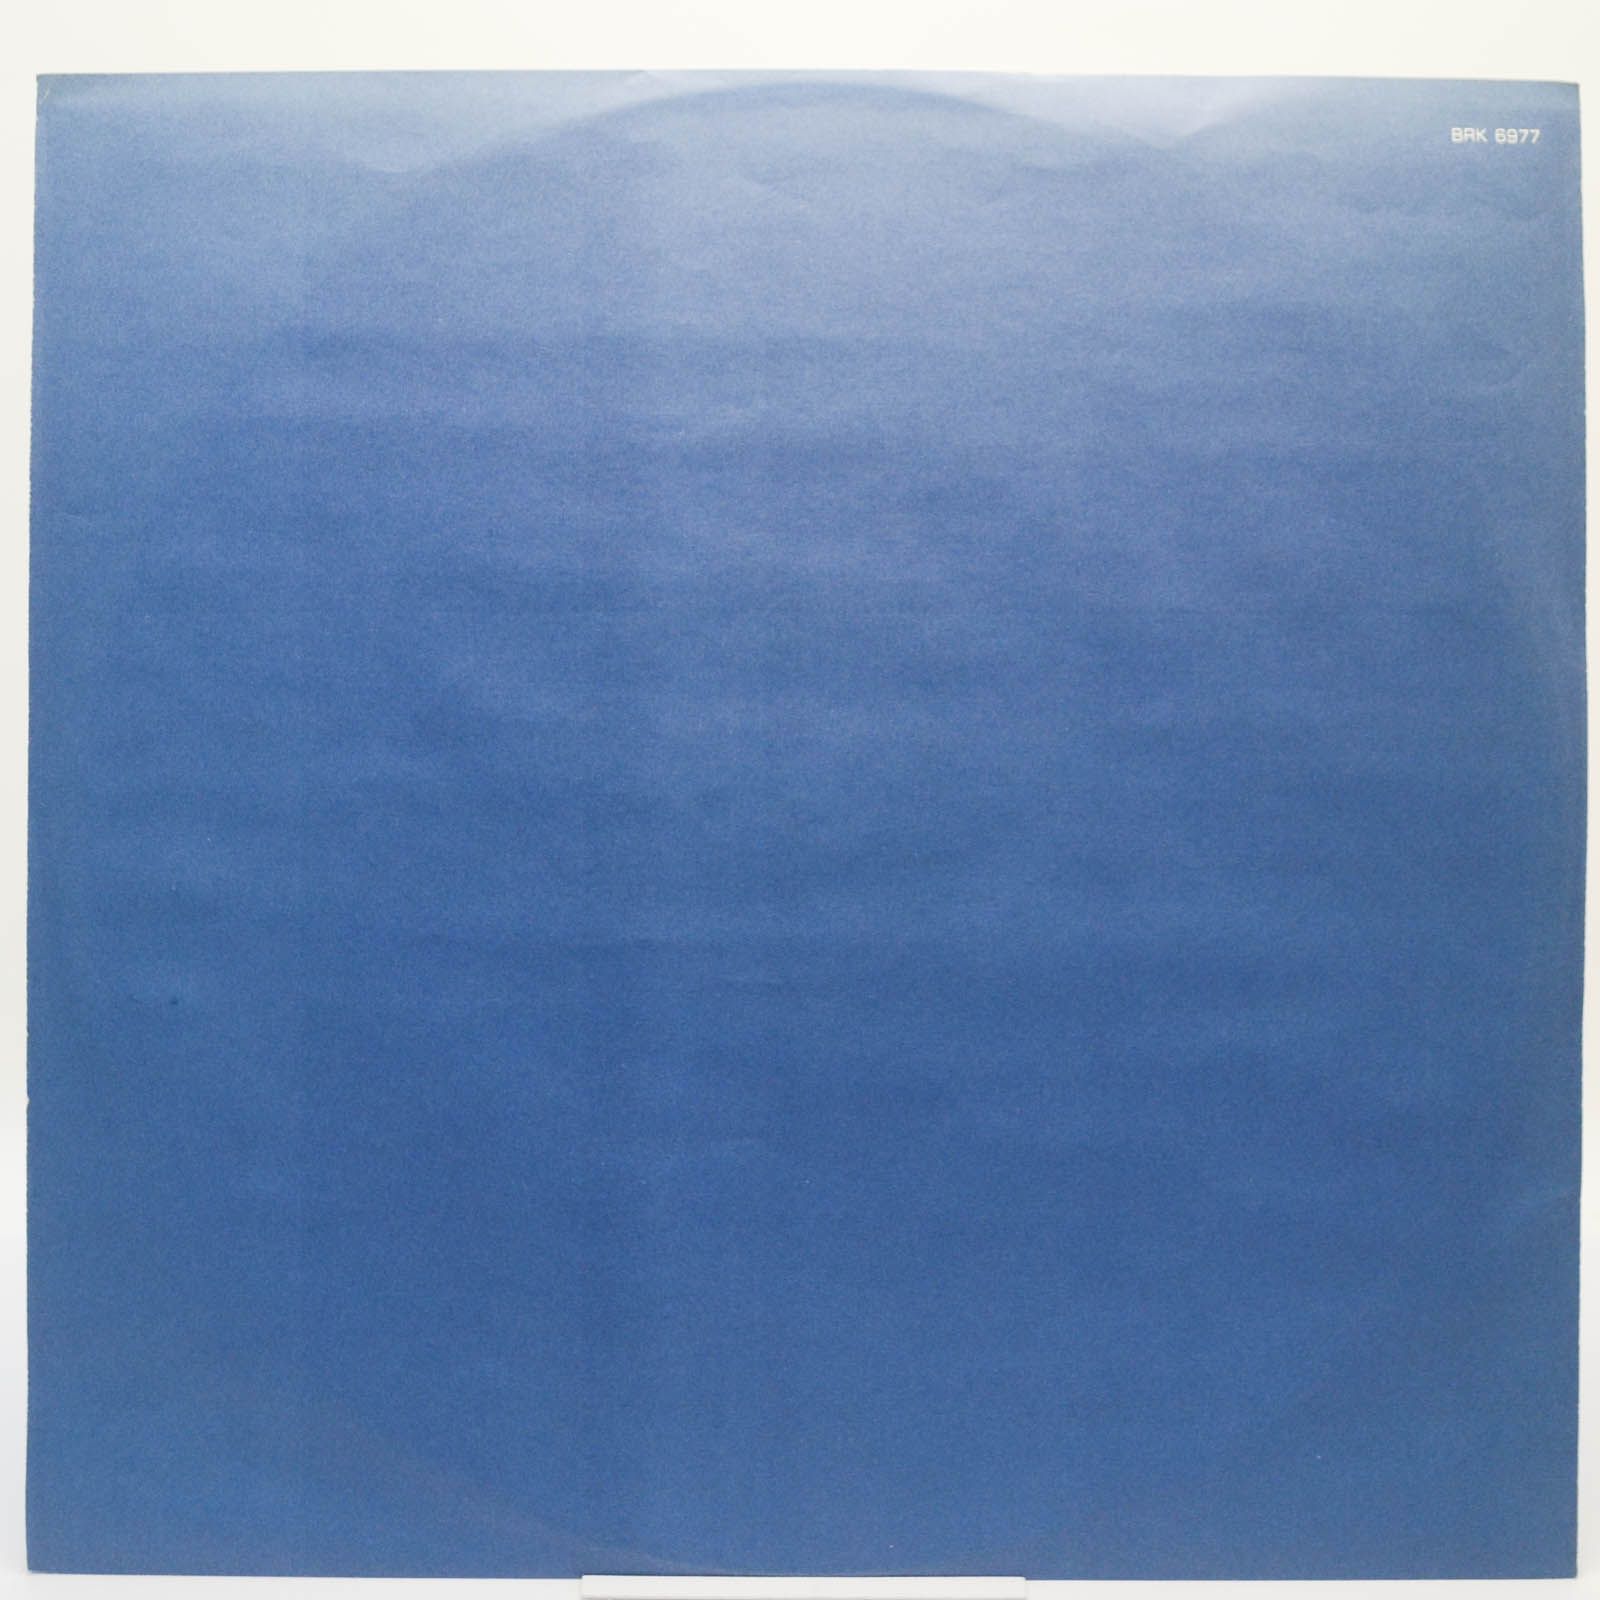 Foghat — Stone Blue, 1978